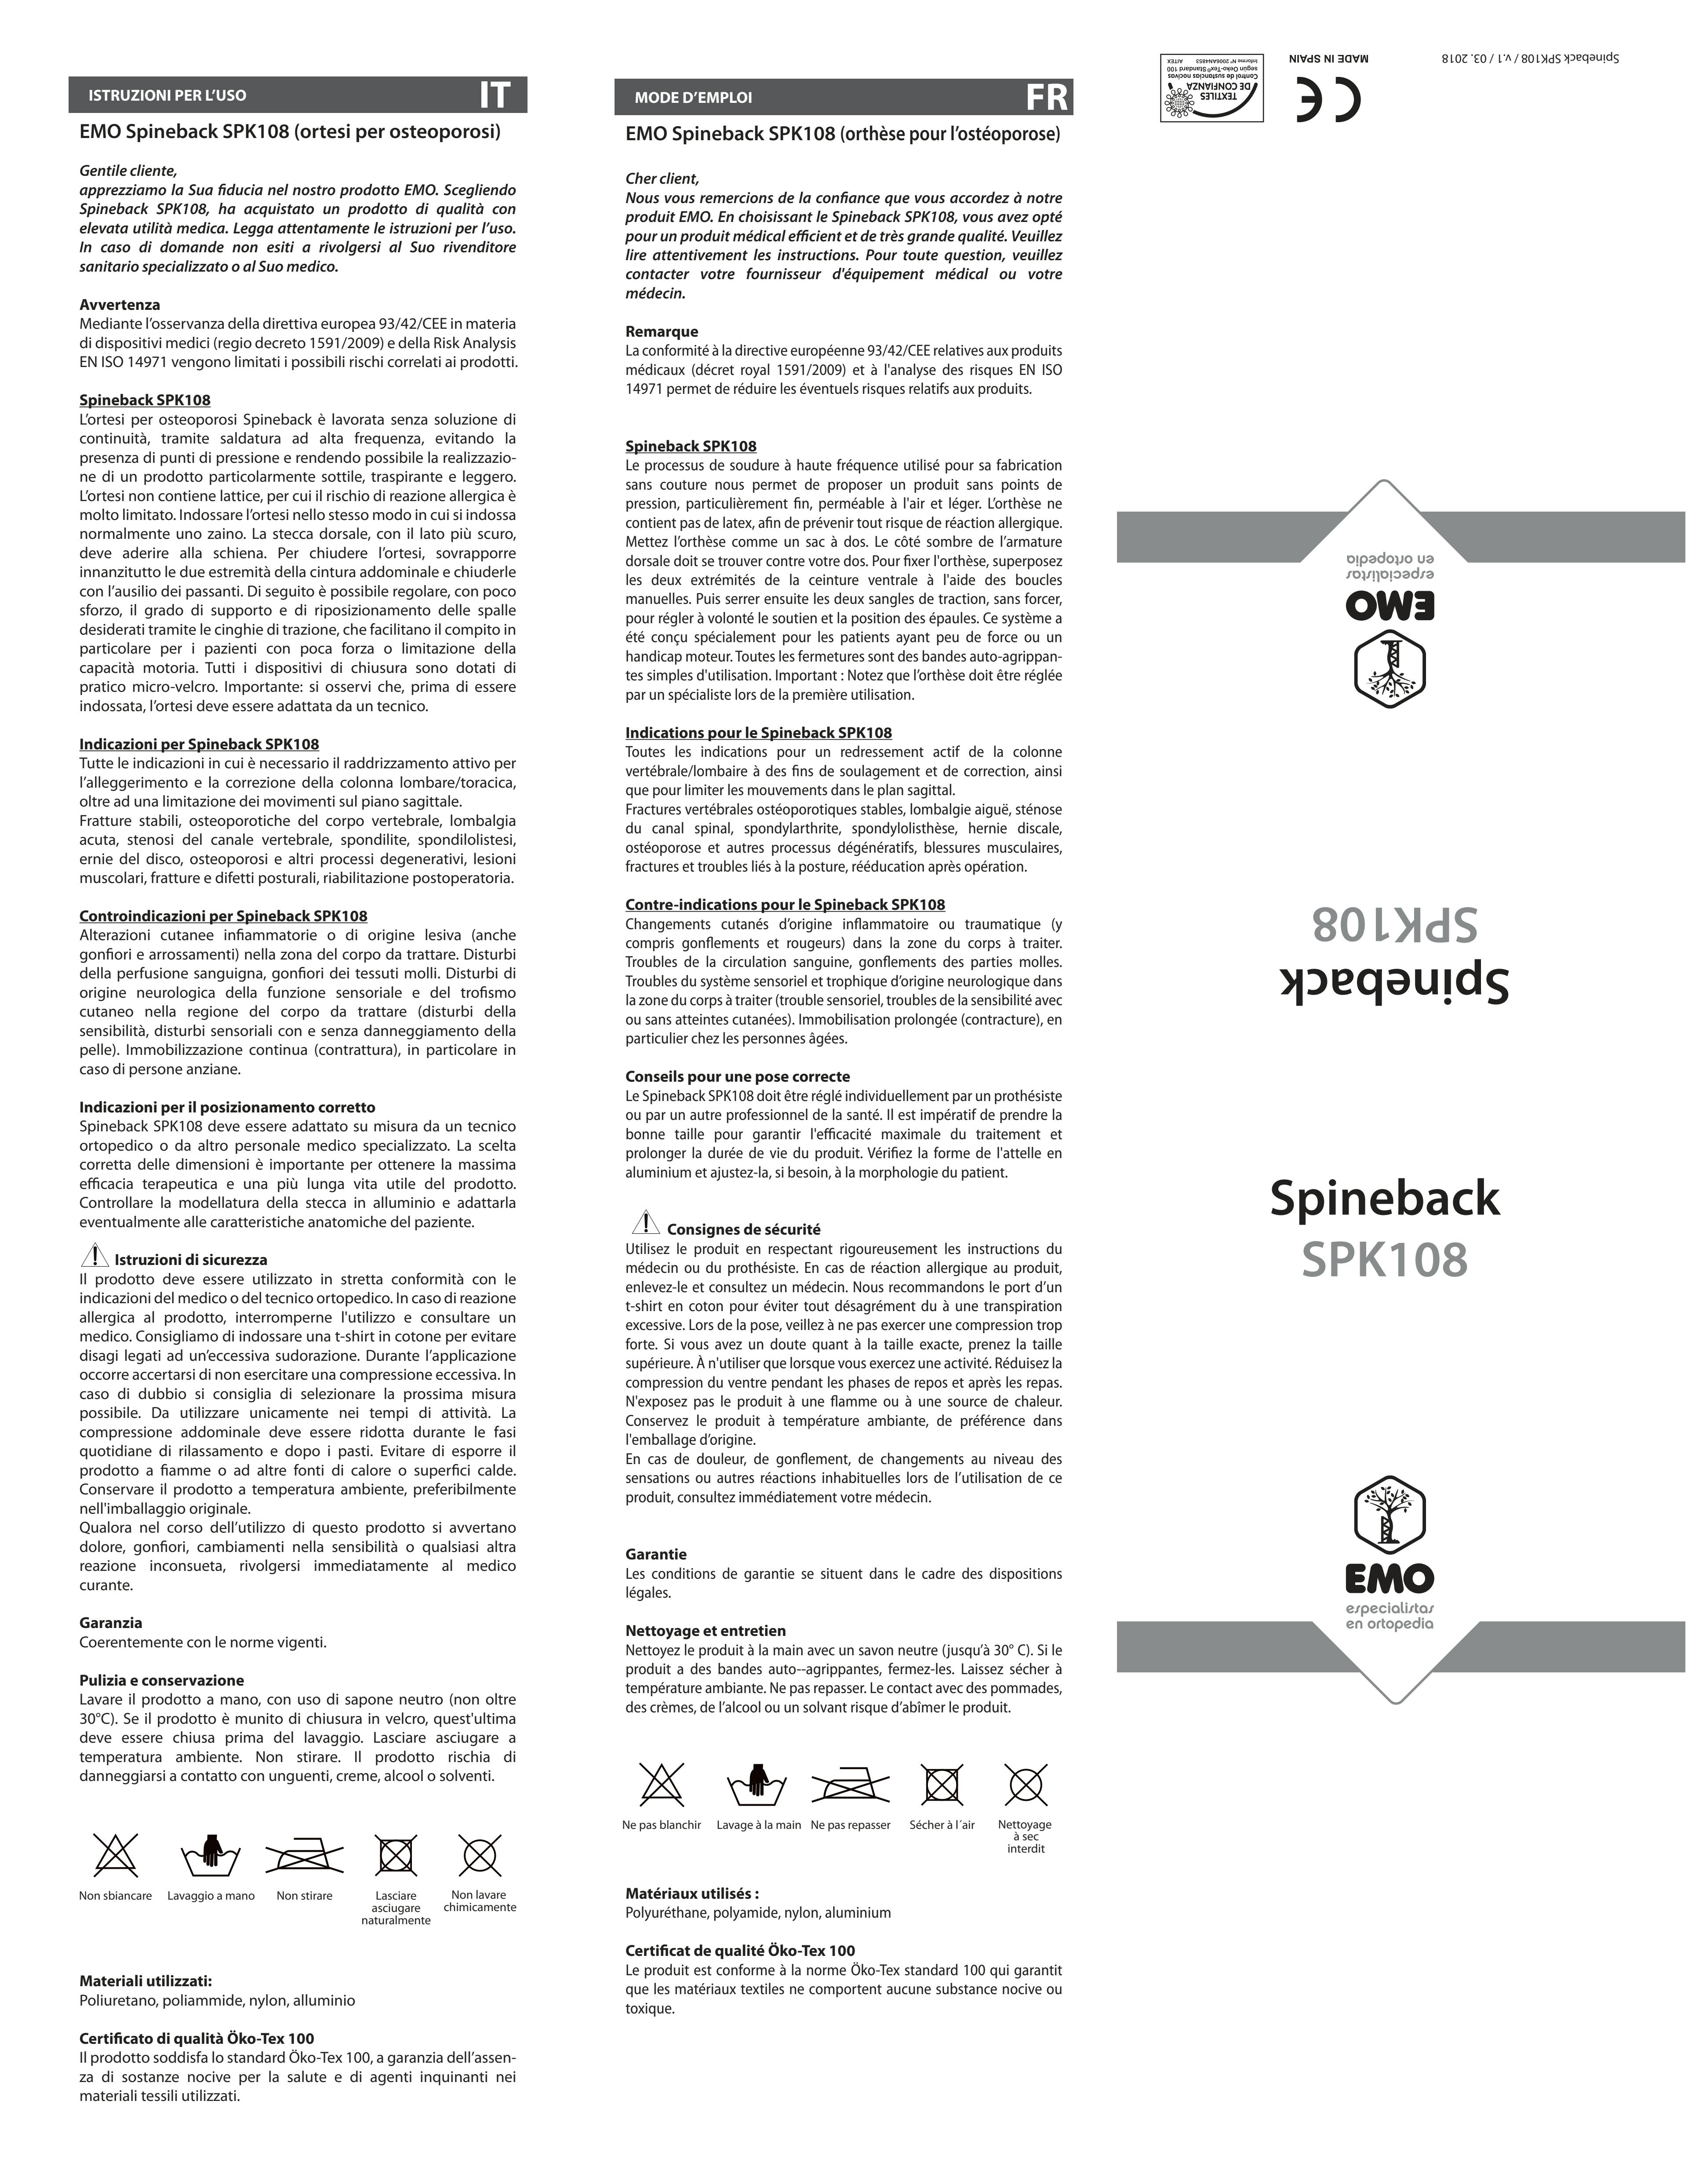 Gebrauchsanleitung_EMO_Spineback_SPK108-v.1-03.2018.pdf